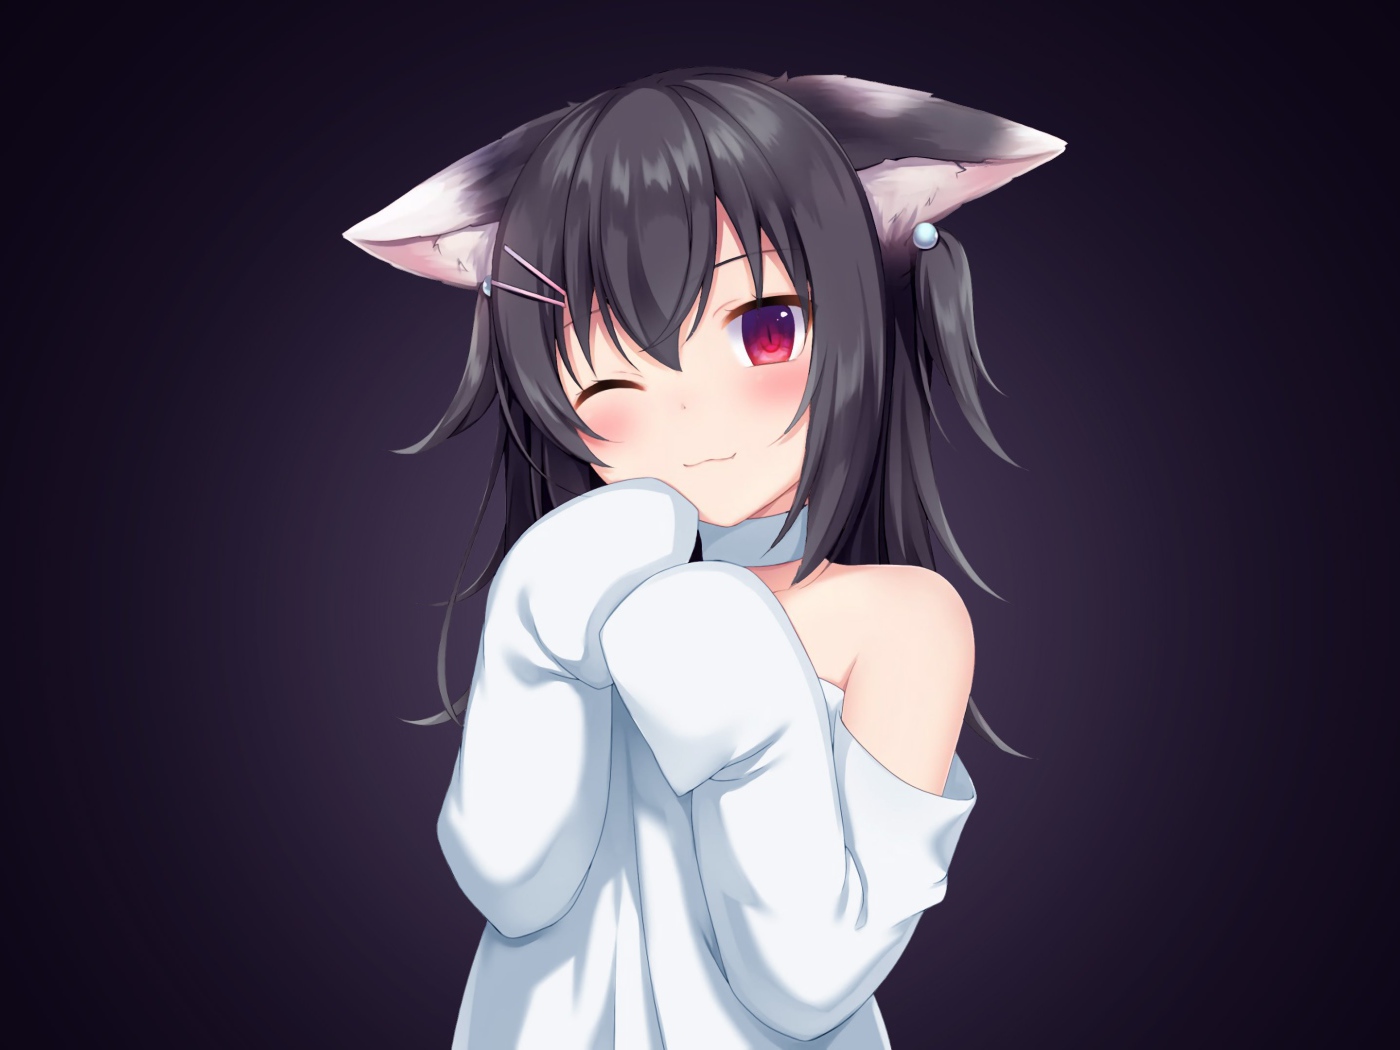 Anime girl with cat ears